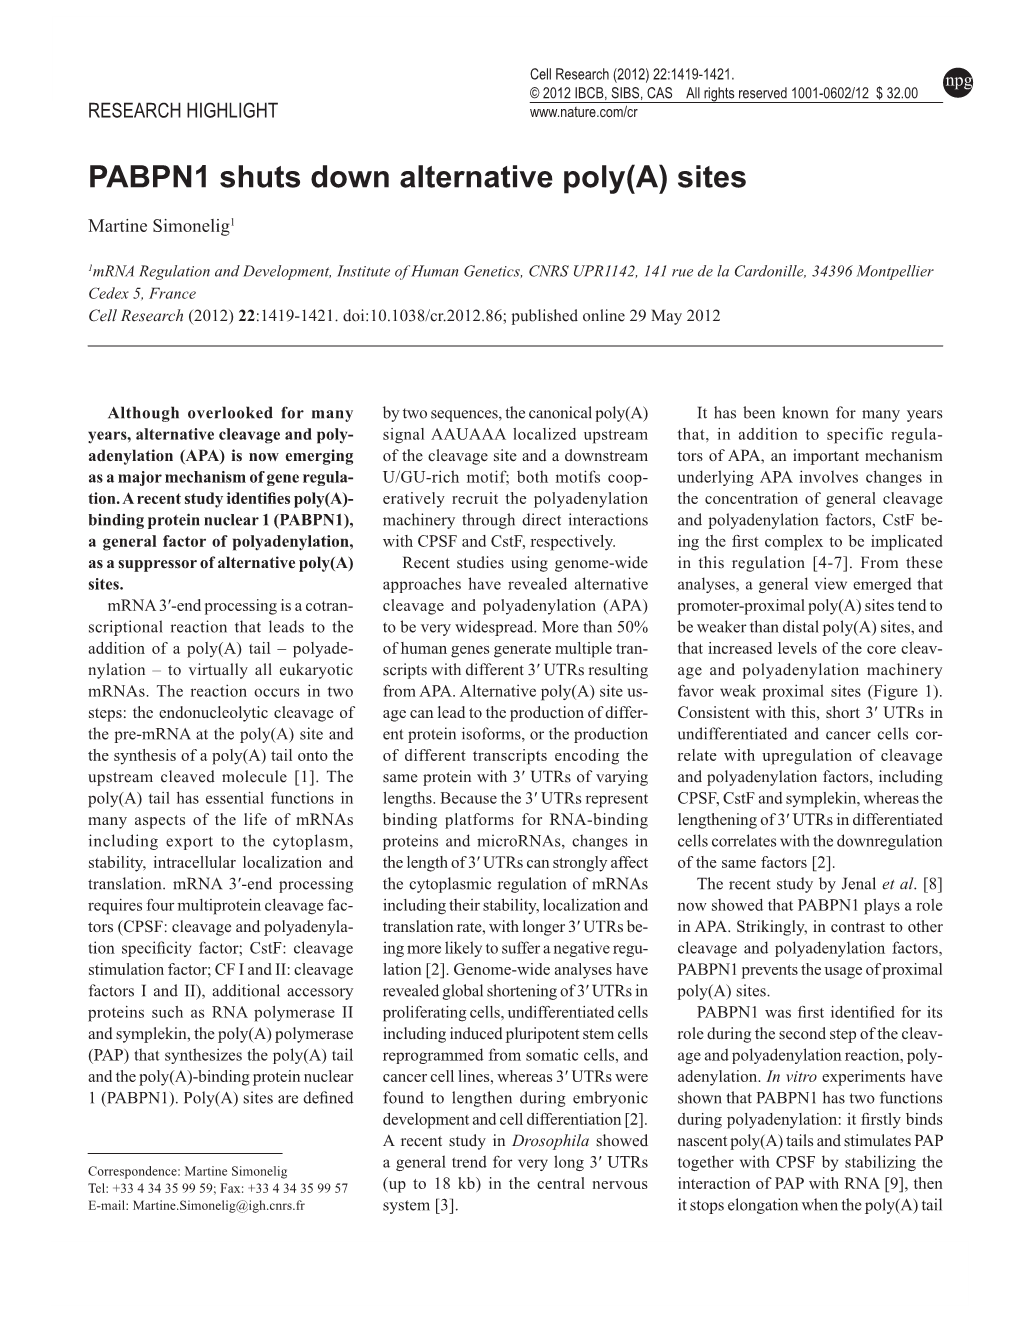 PABPN1 Shuts Down Alternative Poly(A) Sites